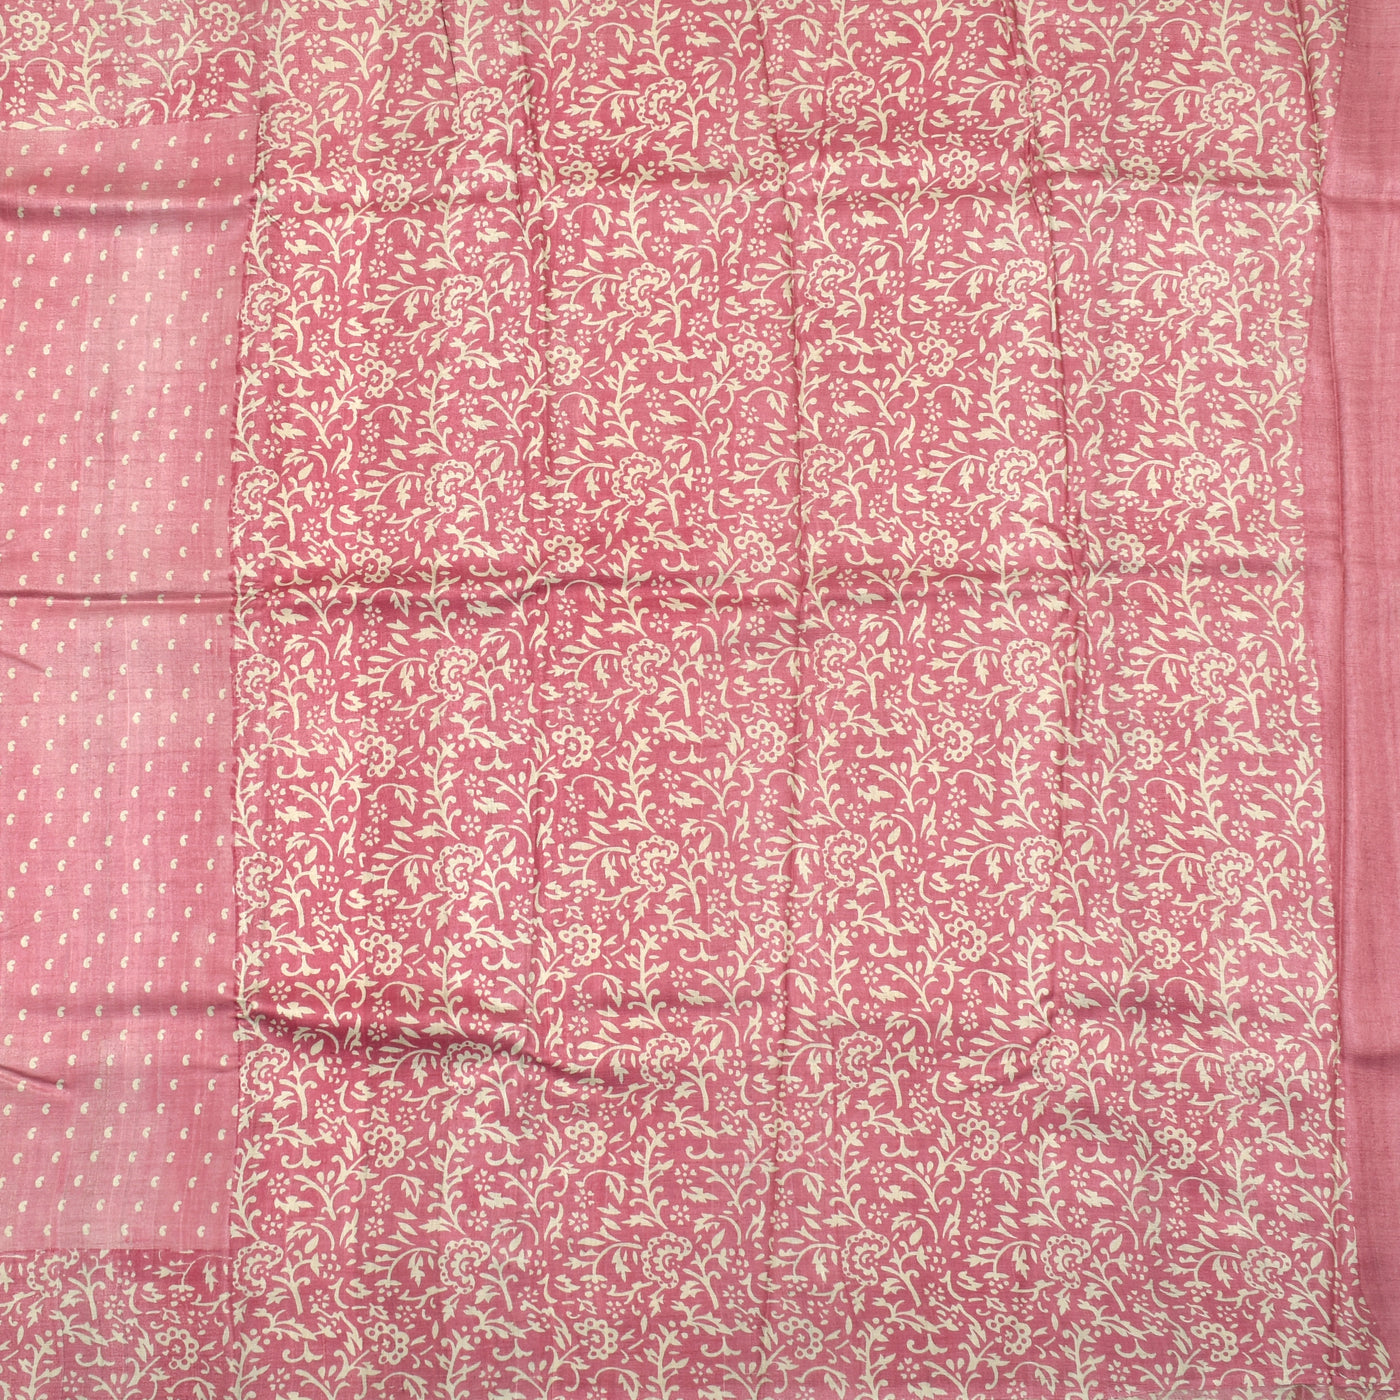 Onion Pink Tussar Silk Saree with Small Mango Print Design